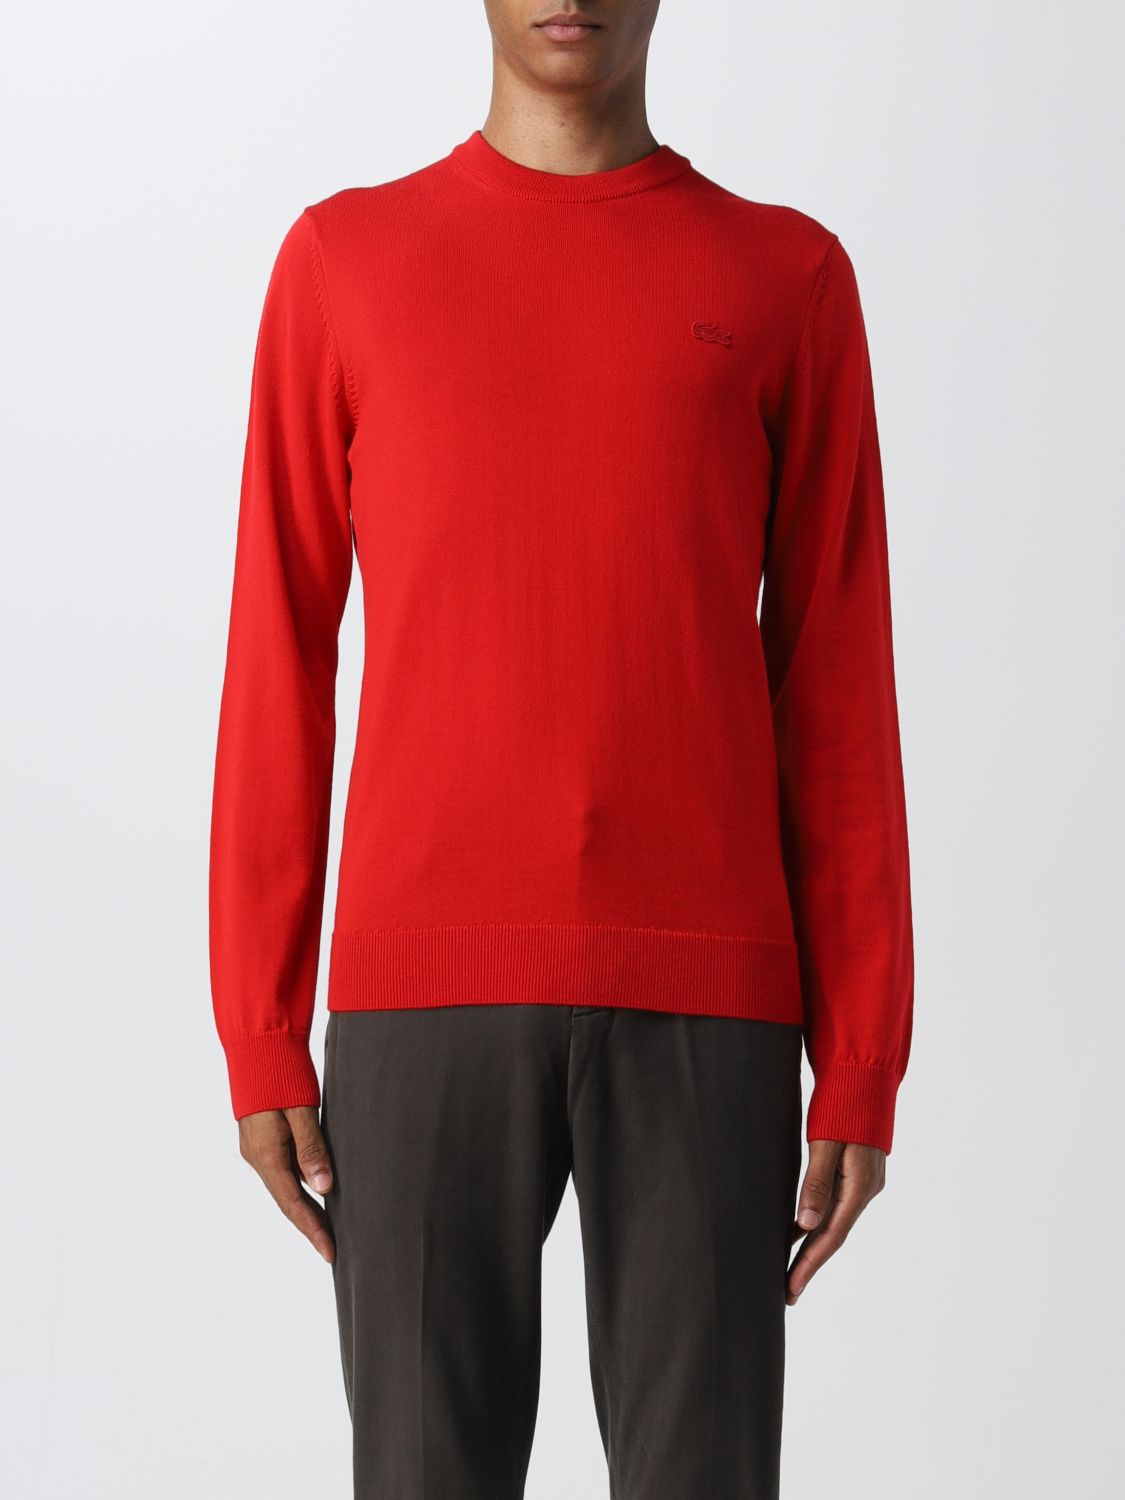 LACOSTE: jumper for men - Red | Lacoste jumper AH1969 online on GIGLIO.COM